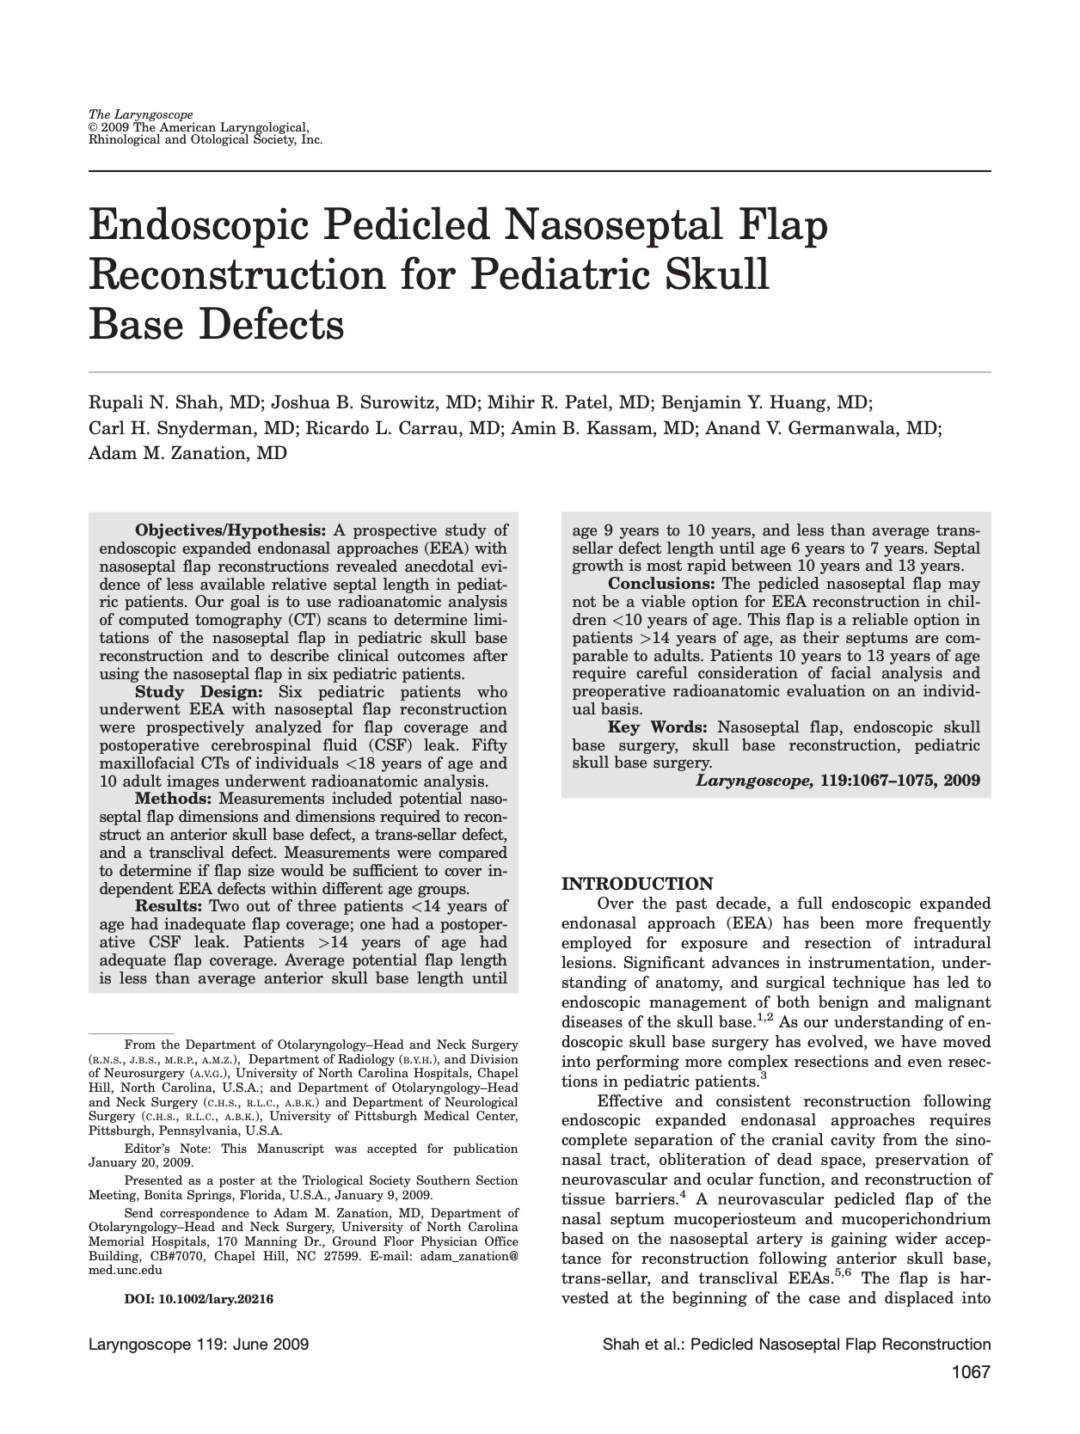 Endoscopic Pedicled Nasoseptal Flap Reconstruction for Pediatric Skull Base Defects